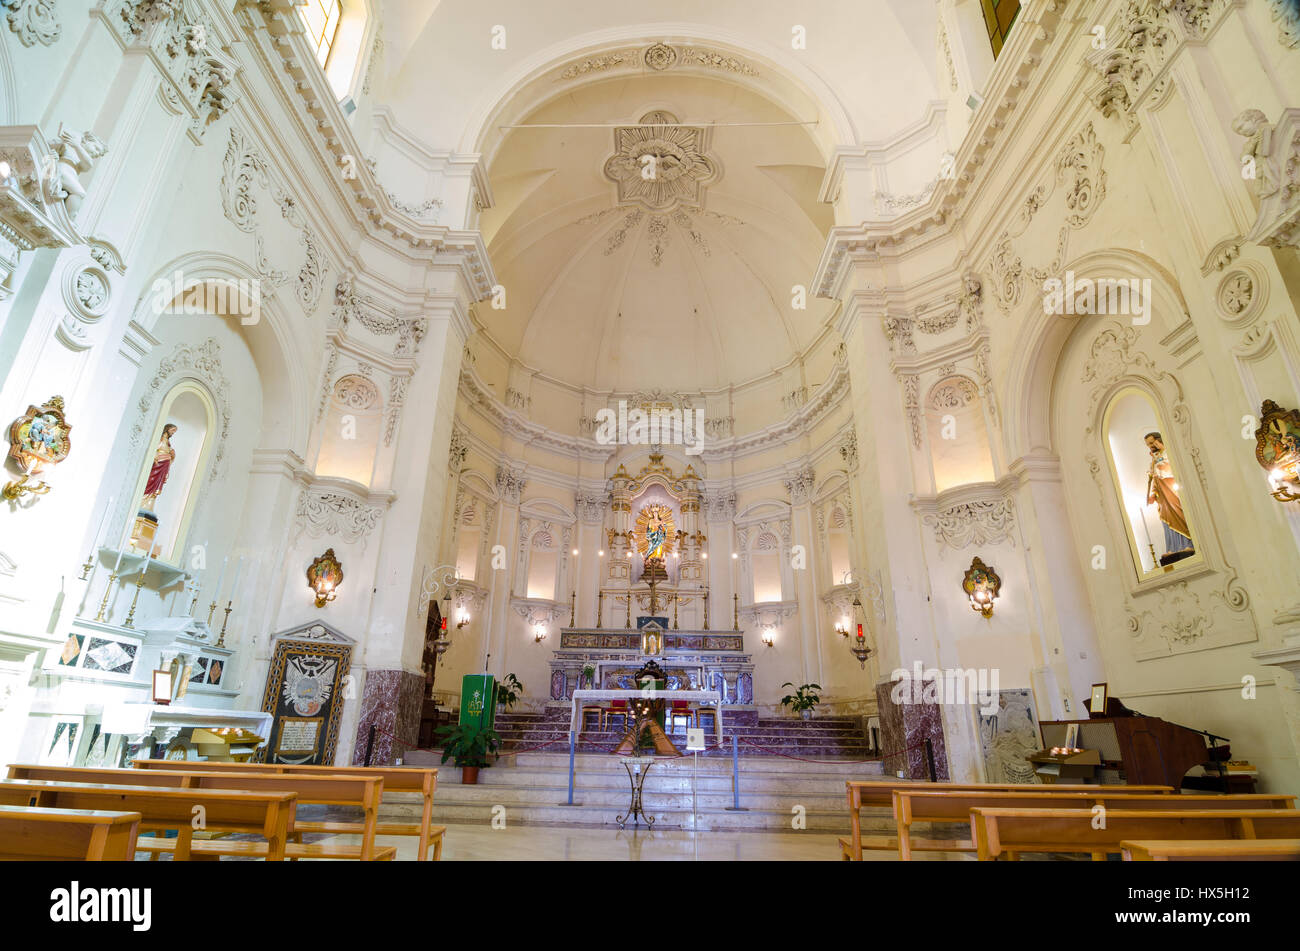 Noto, Italien - 13. September 2015: Innenraum der Kirche von Saint Francis Immaculate, sizilianischen Barocks. Noto, Italien Stockfoto